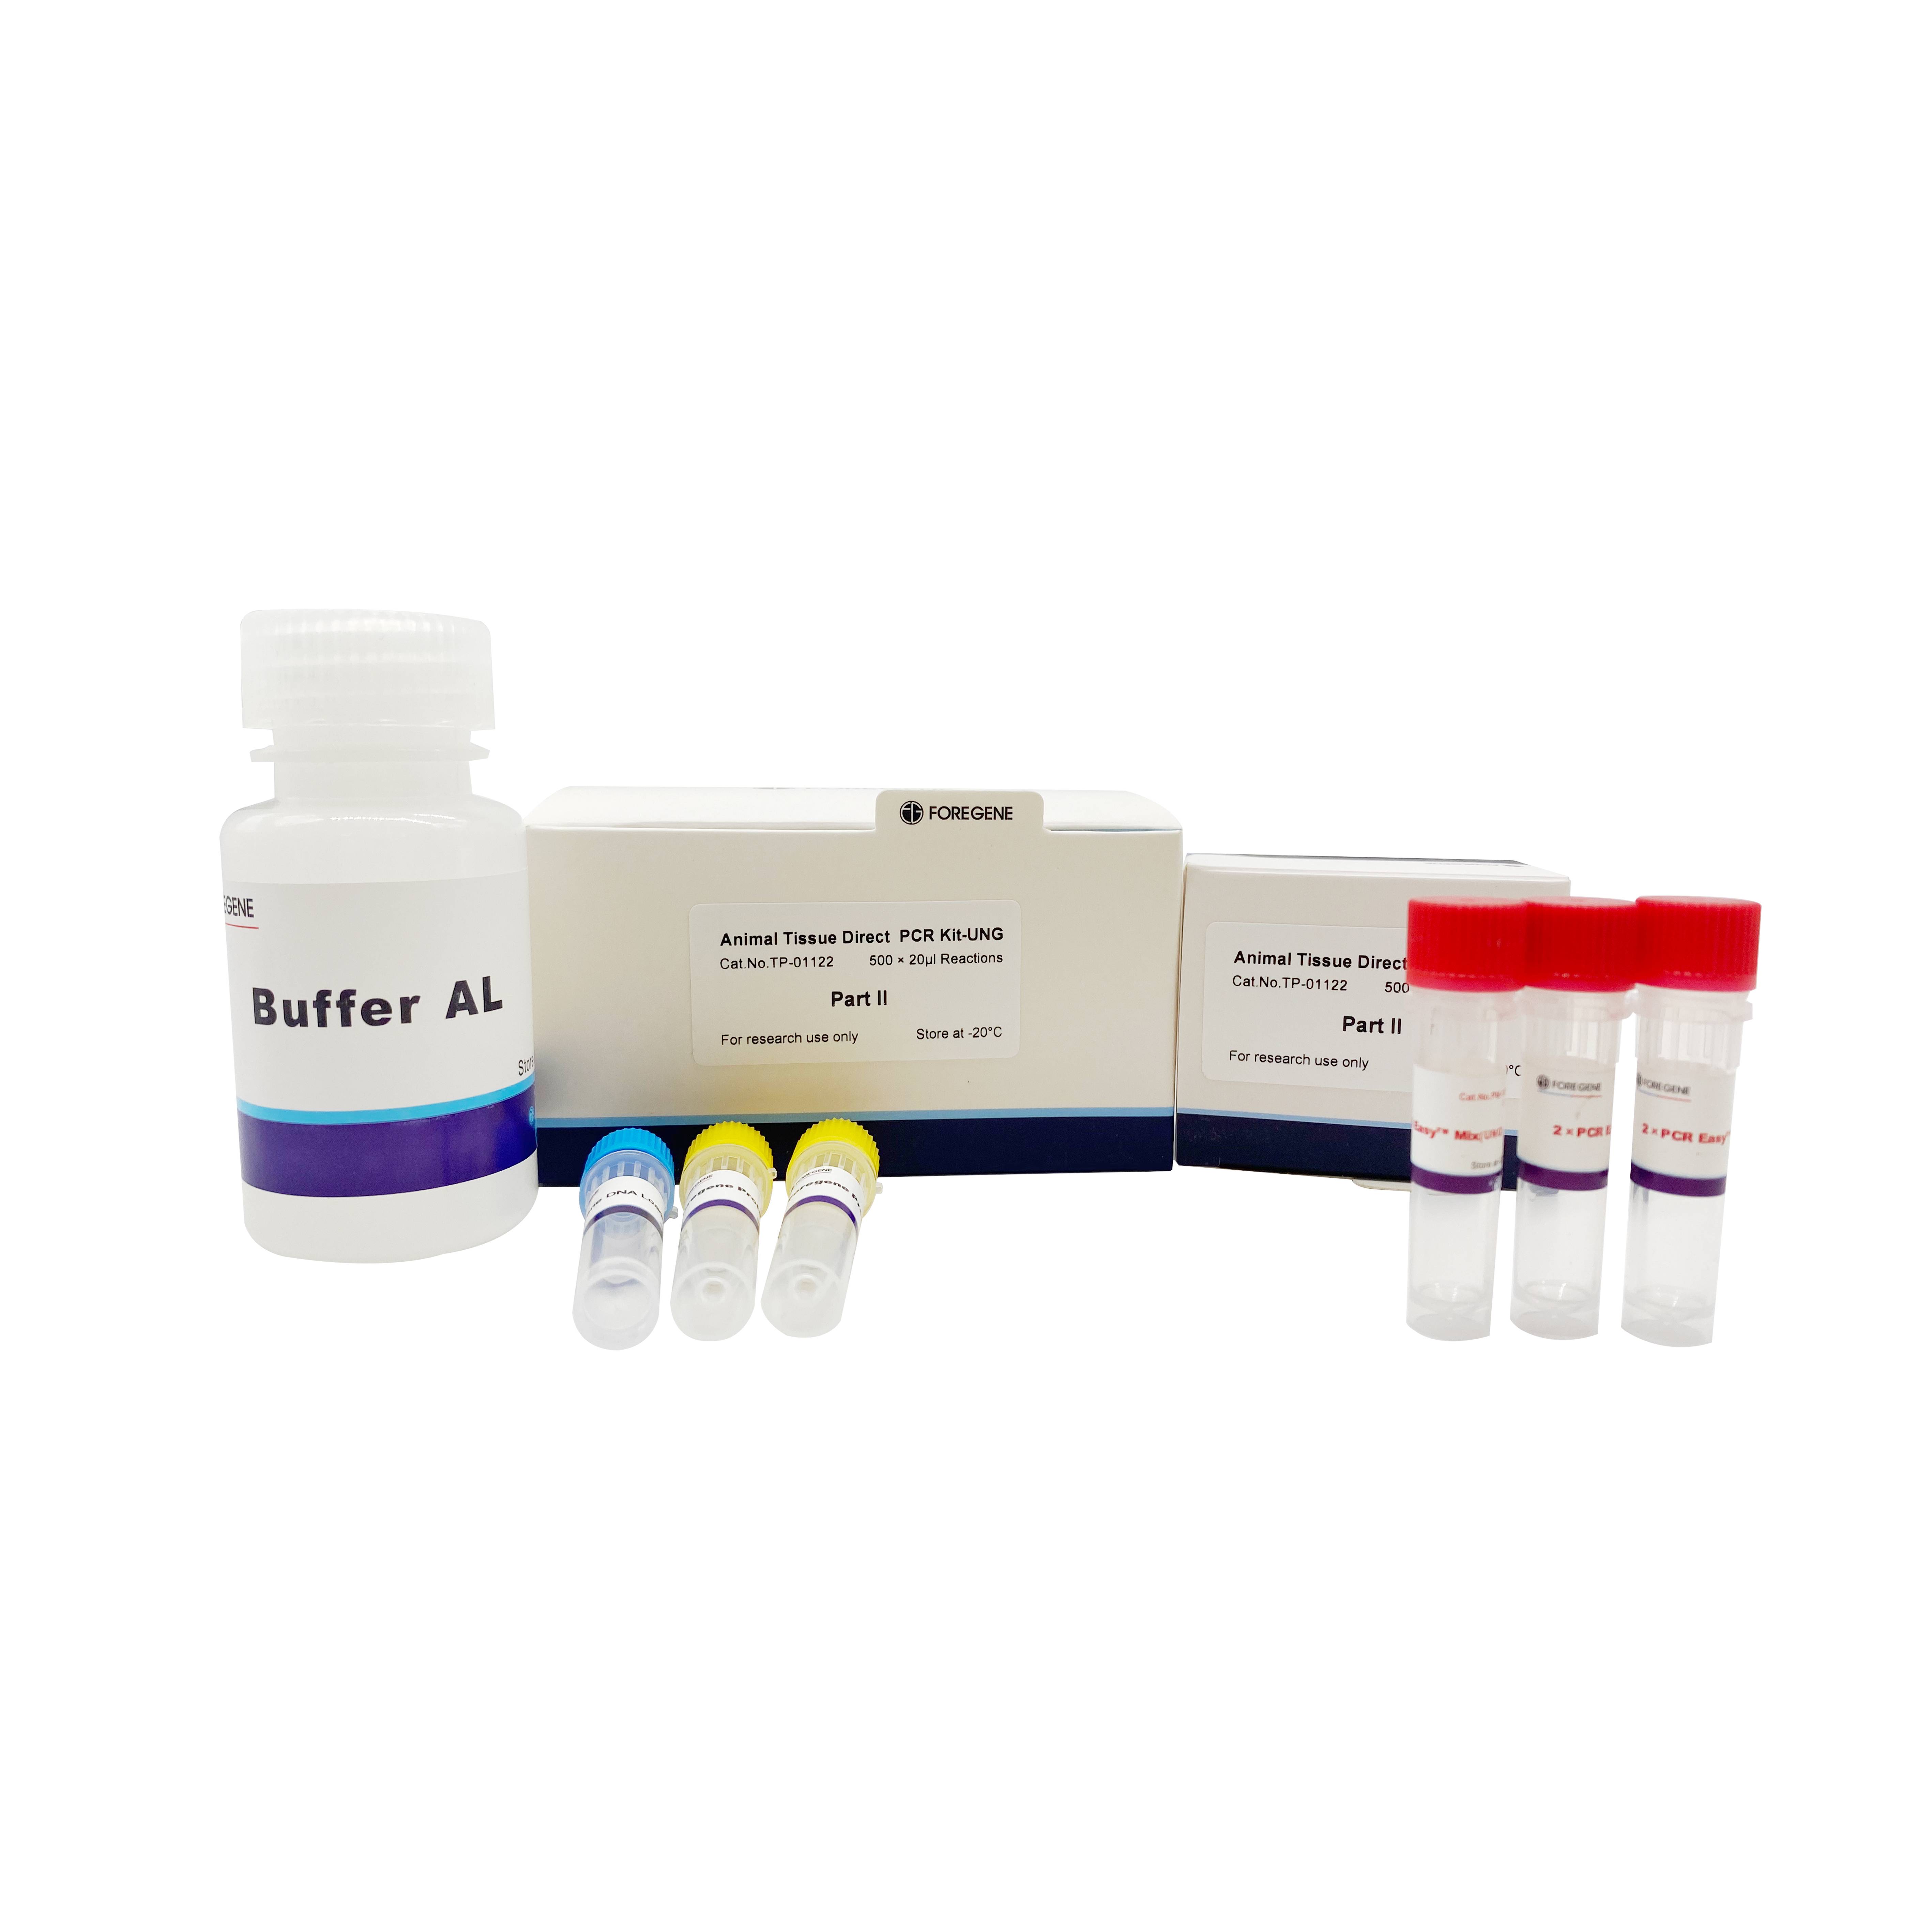 Protokół Animal Tissue Direct PCR kit-UNG (bez narzędzi do pobierania próbek).